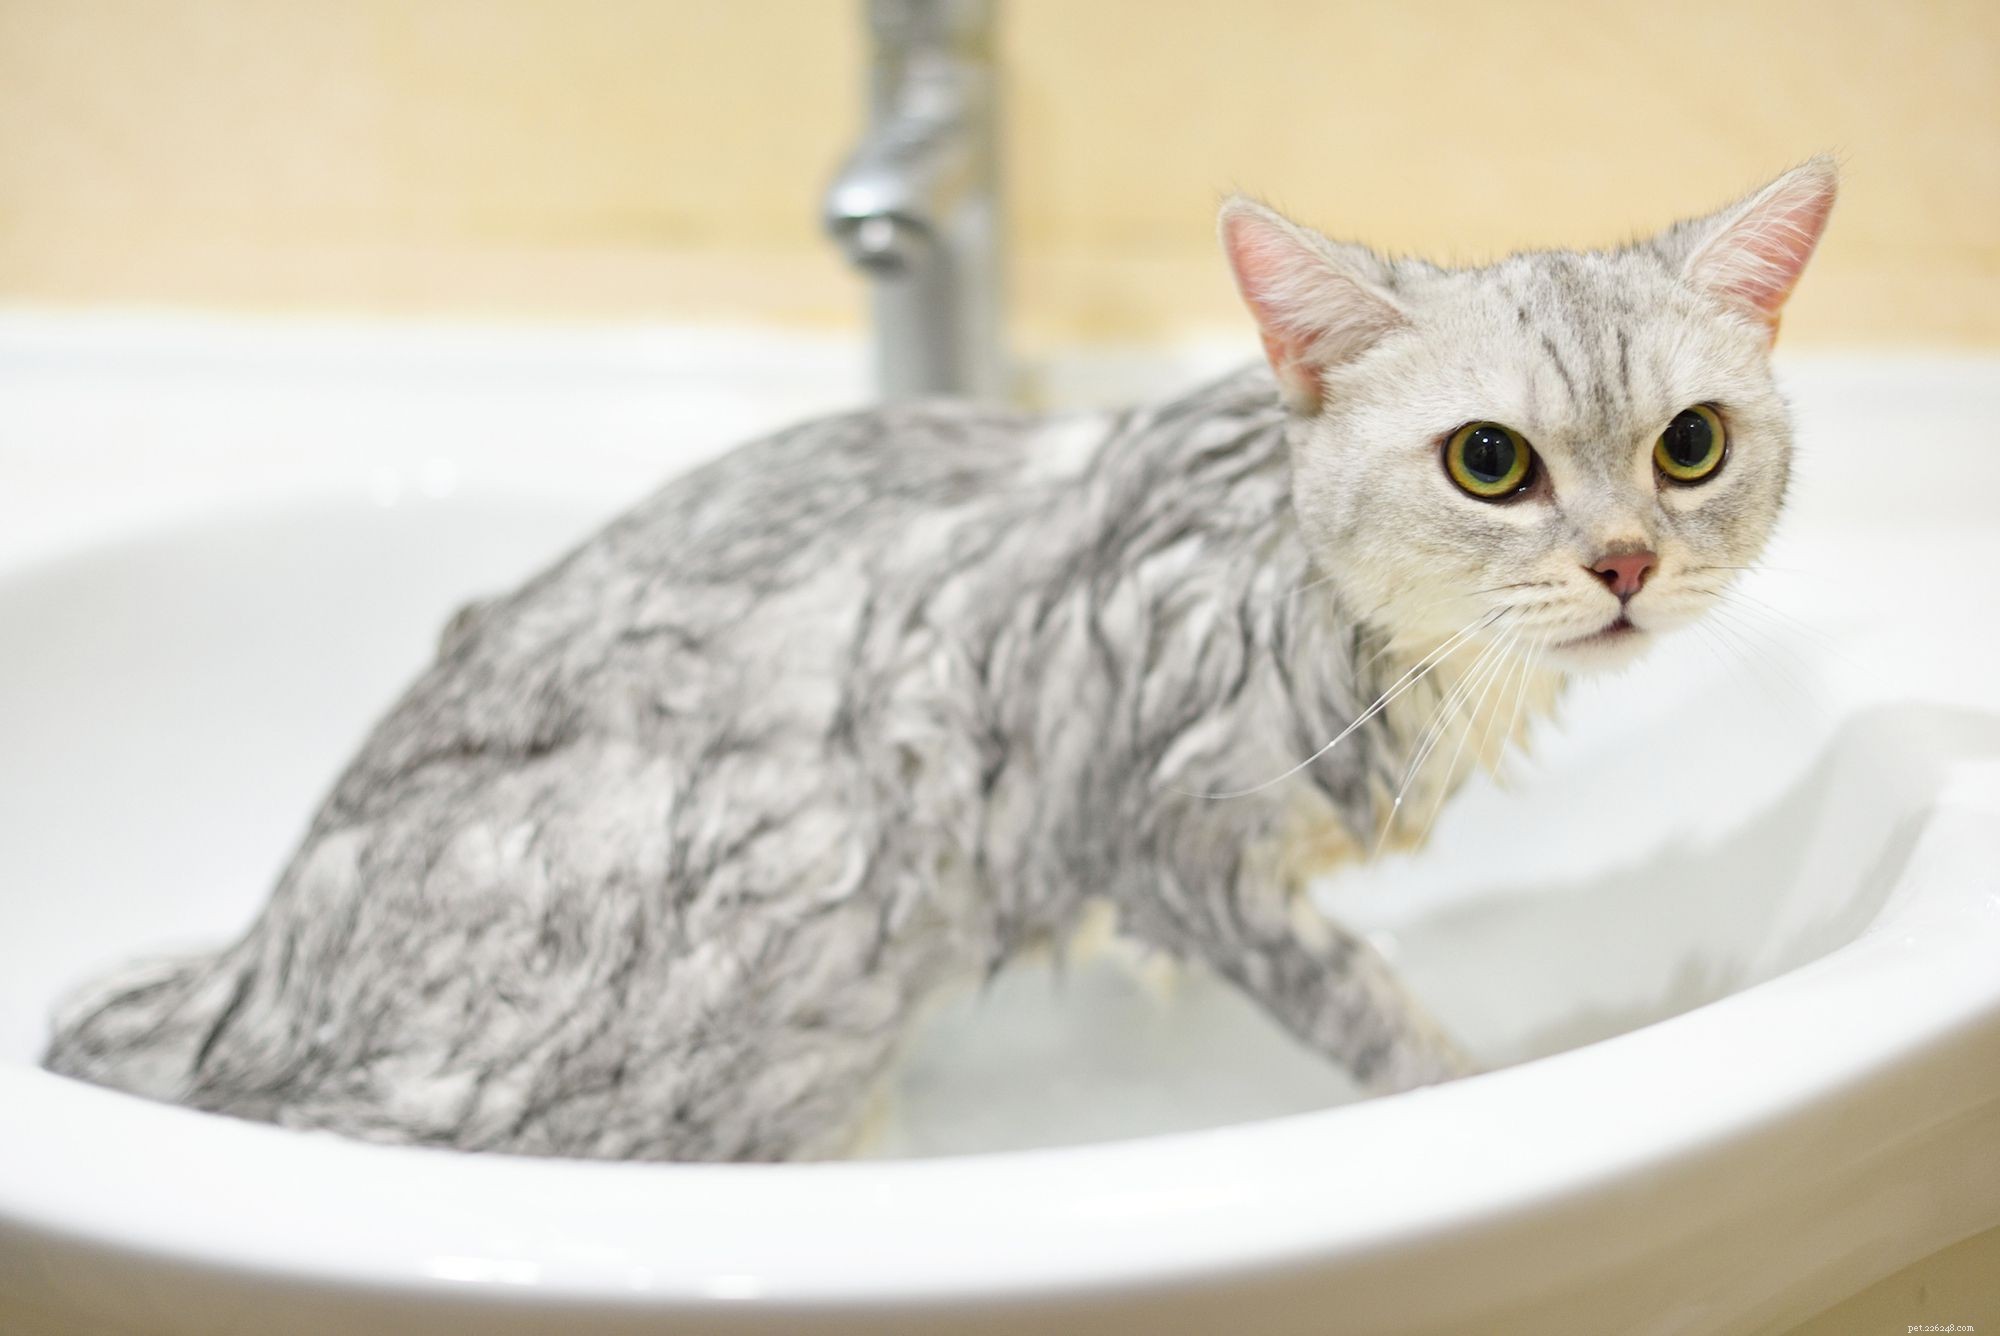 Hur du badar din kattunge eller vuxen katt